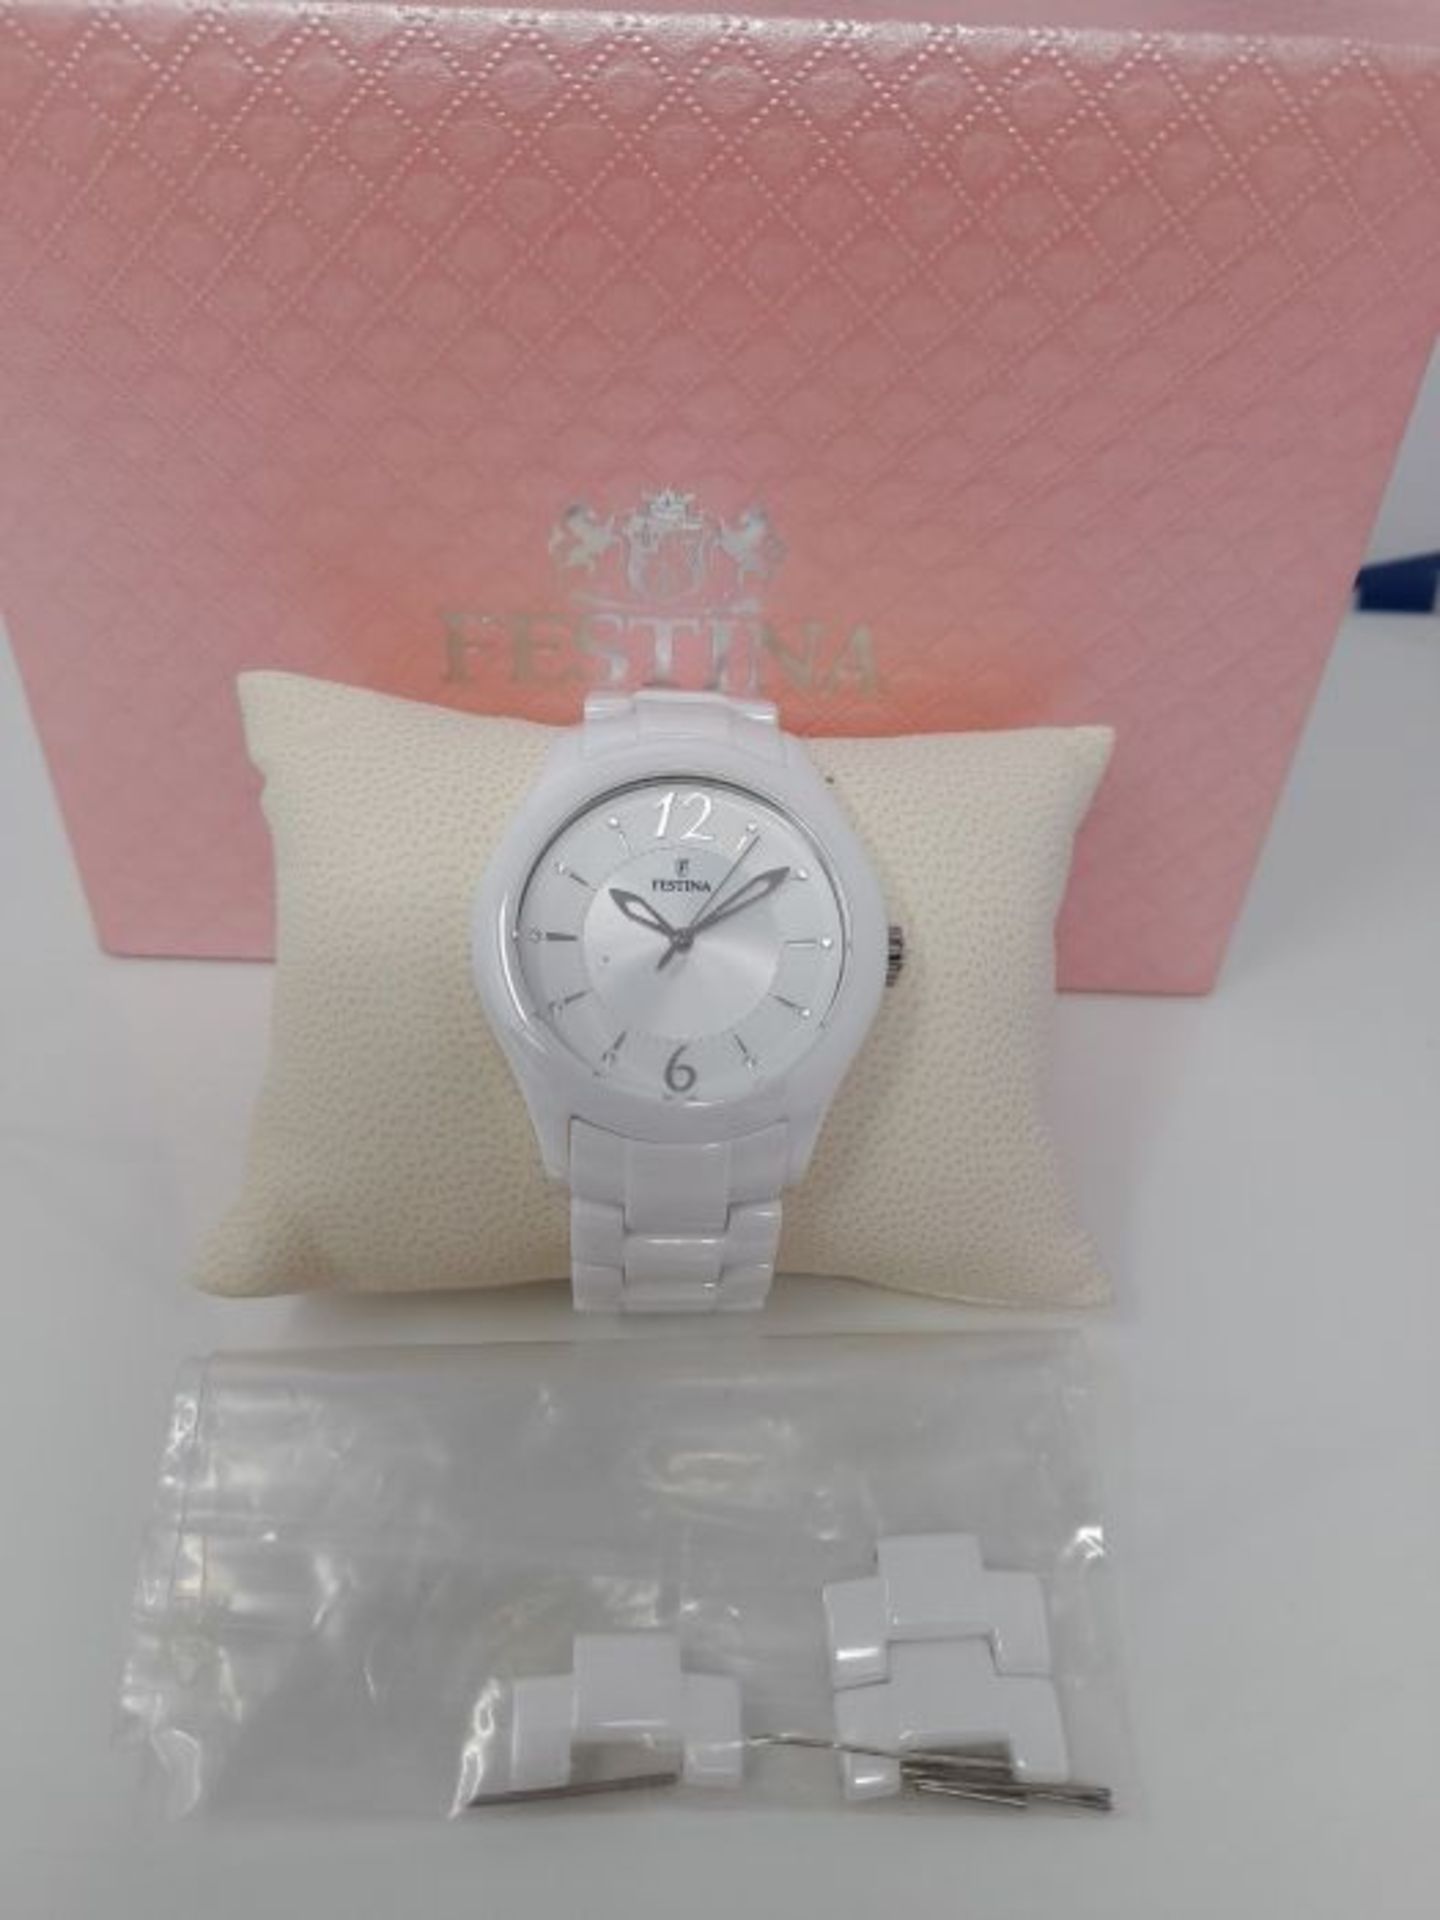 RRP £131.00 Festina Unisex Quartz Watch with White Dial Analogue Display and White Ceramic Bracele - Image 3 of 3